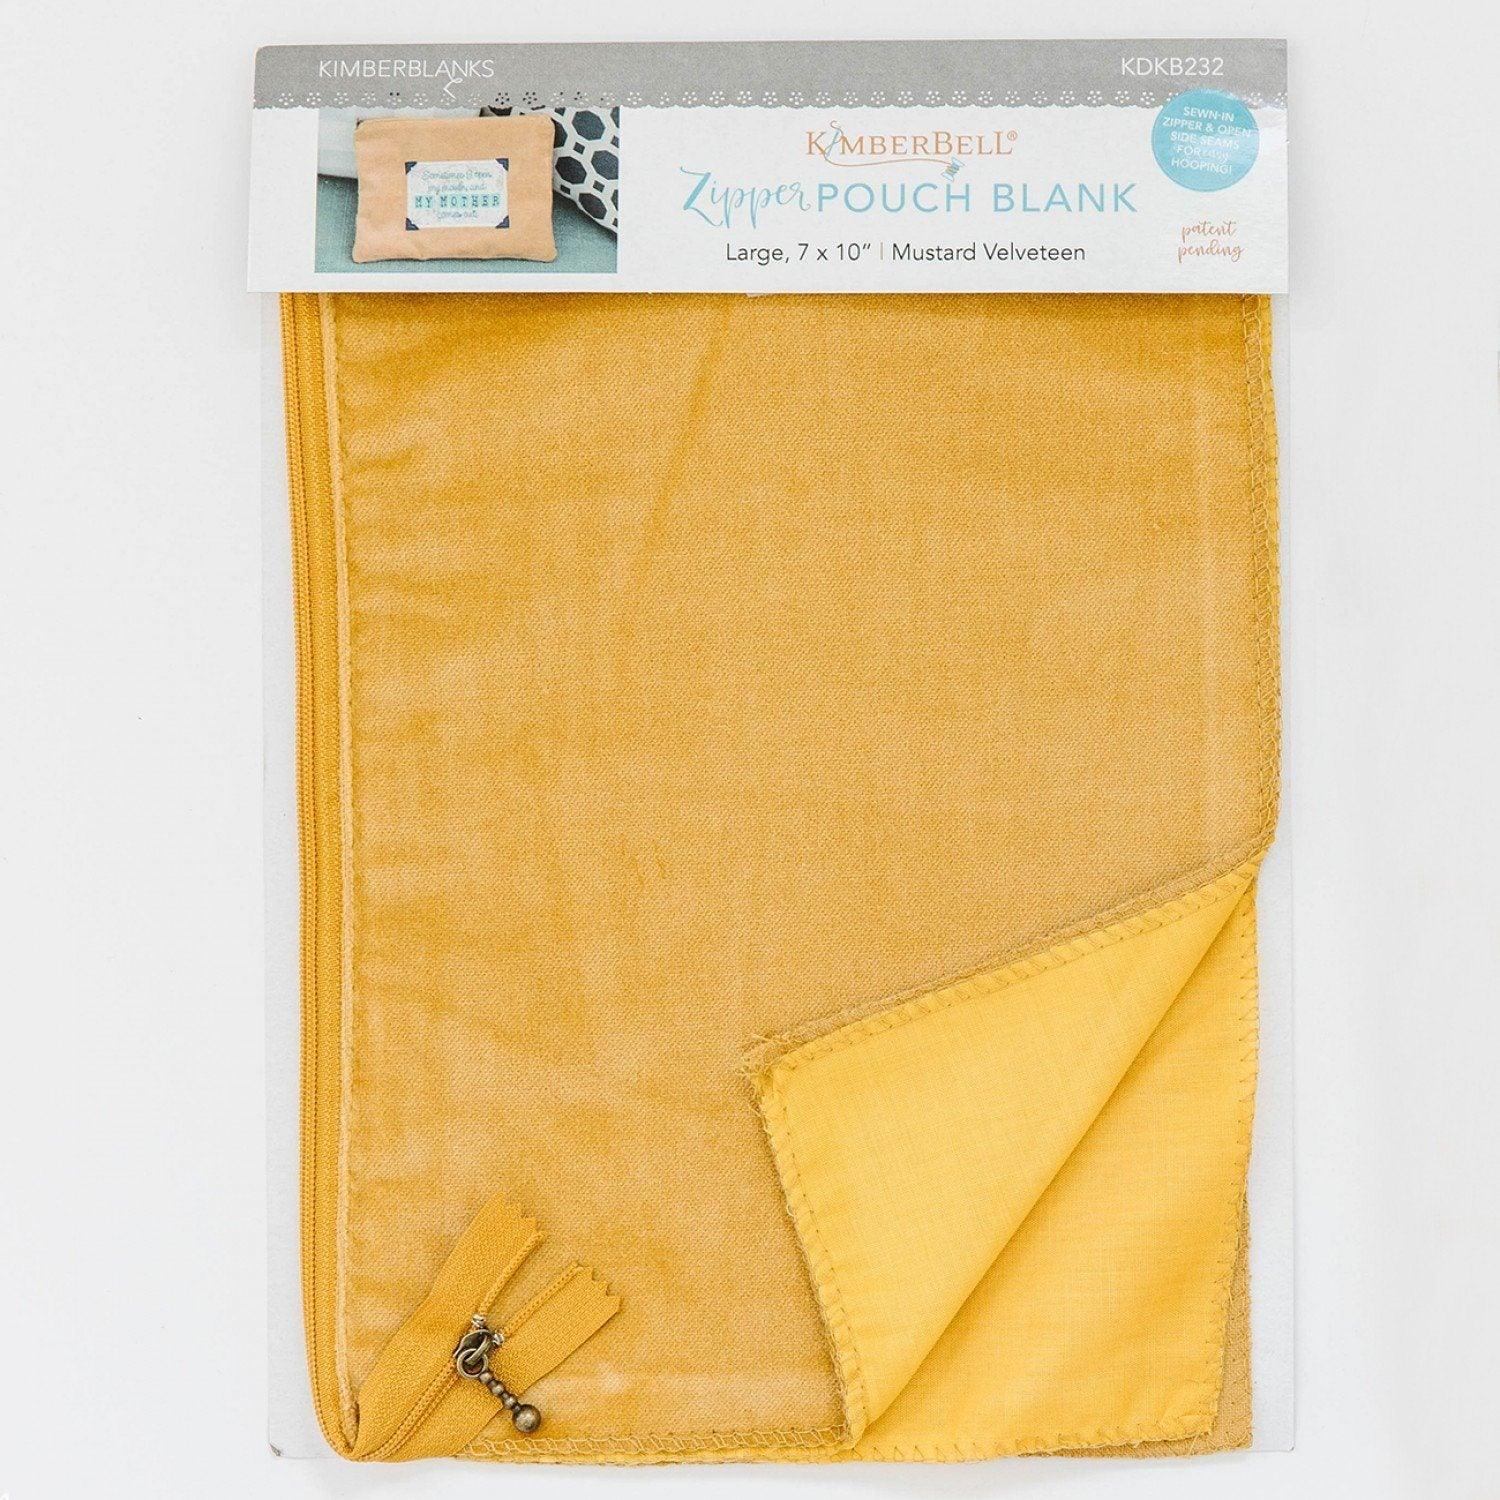 Zipper Pouch Blank - Mustard - Velveteen - Large (7" x 10") - Kimberbell - Kawartha Quilting and Sewing LTD.